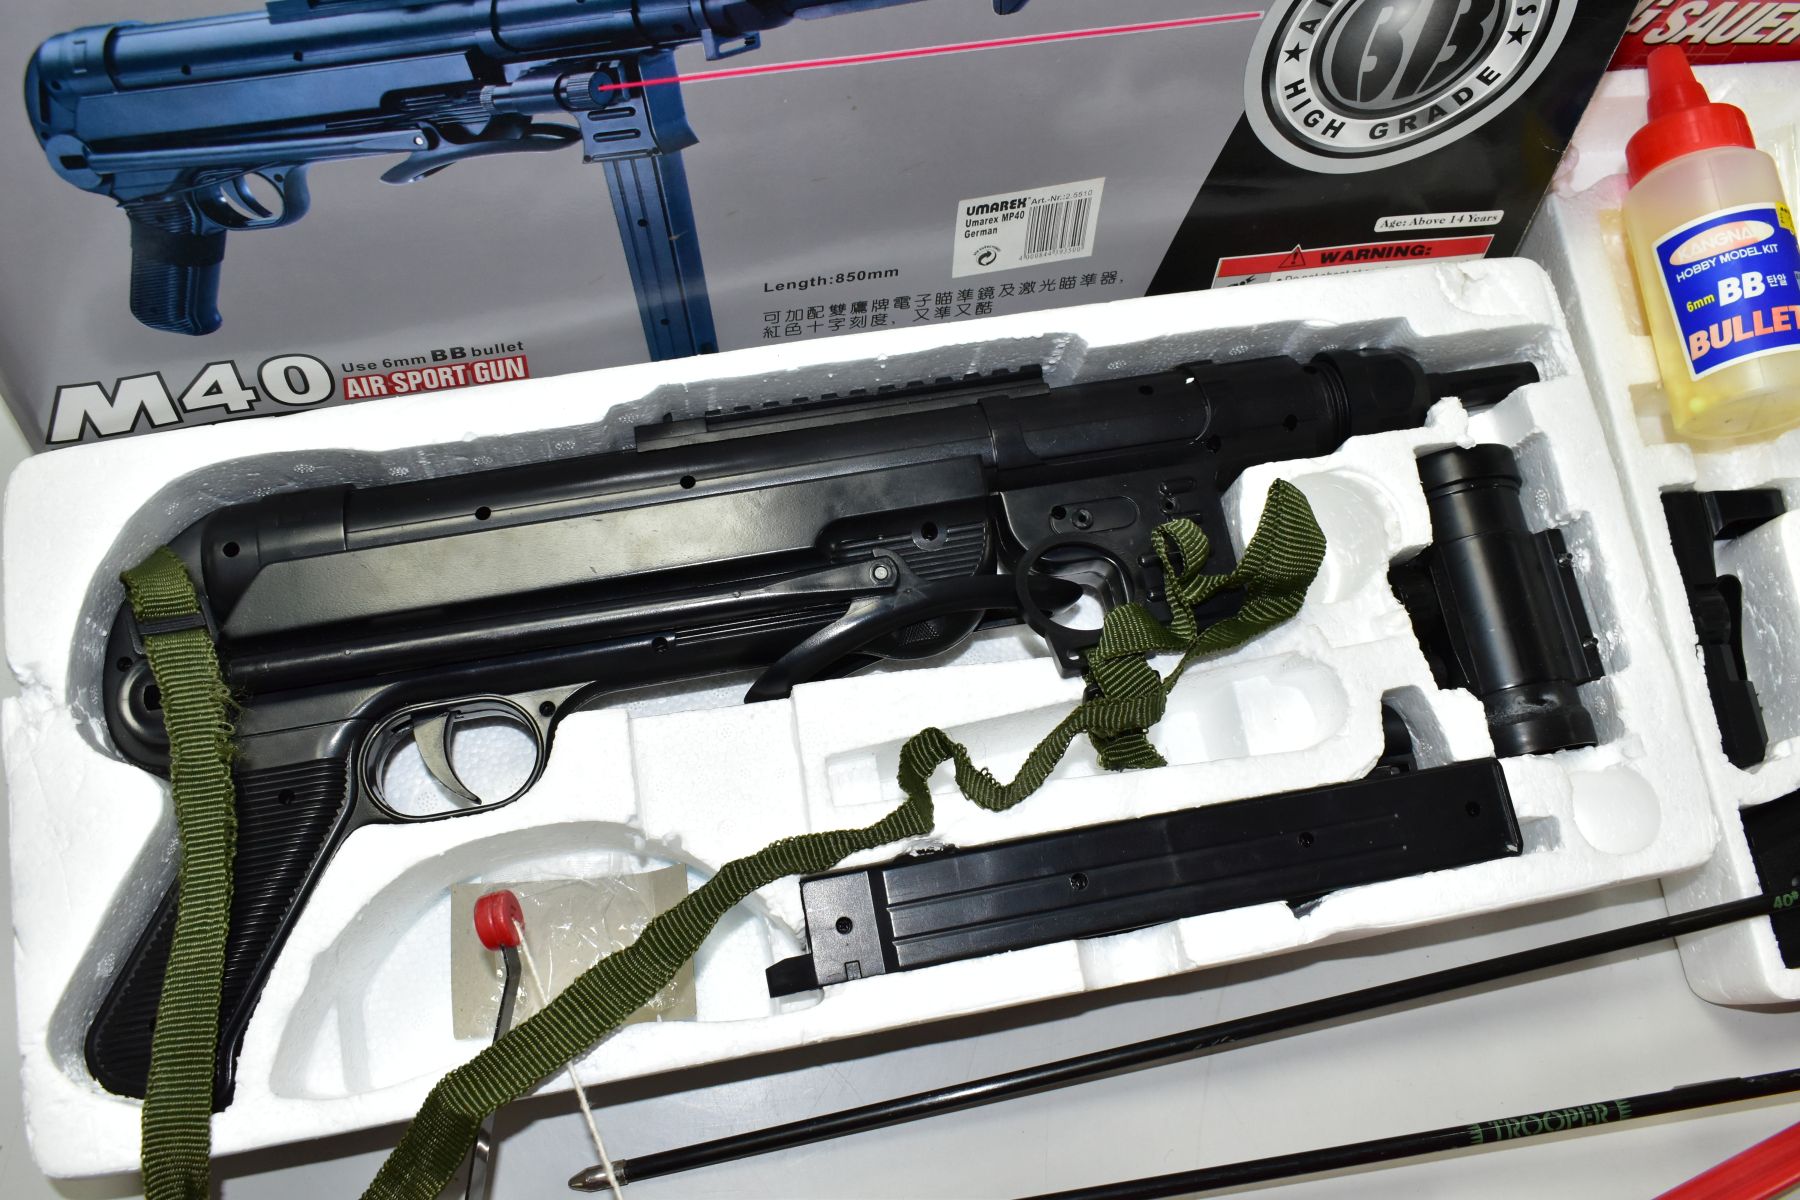 AIRSOFT GUNS, comprising Air Sport M40, Sig Sauer P228 and Desert Eagle .50 AE Magmum pistol, all - Image 4 of 7